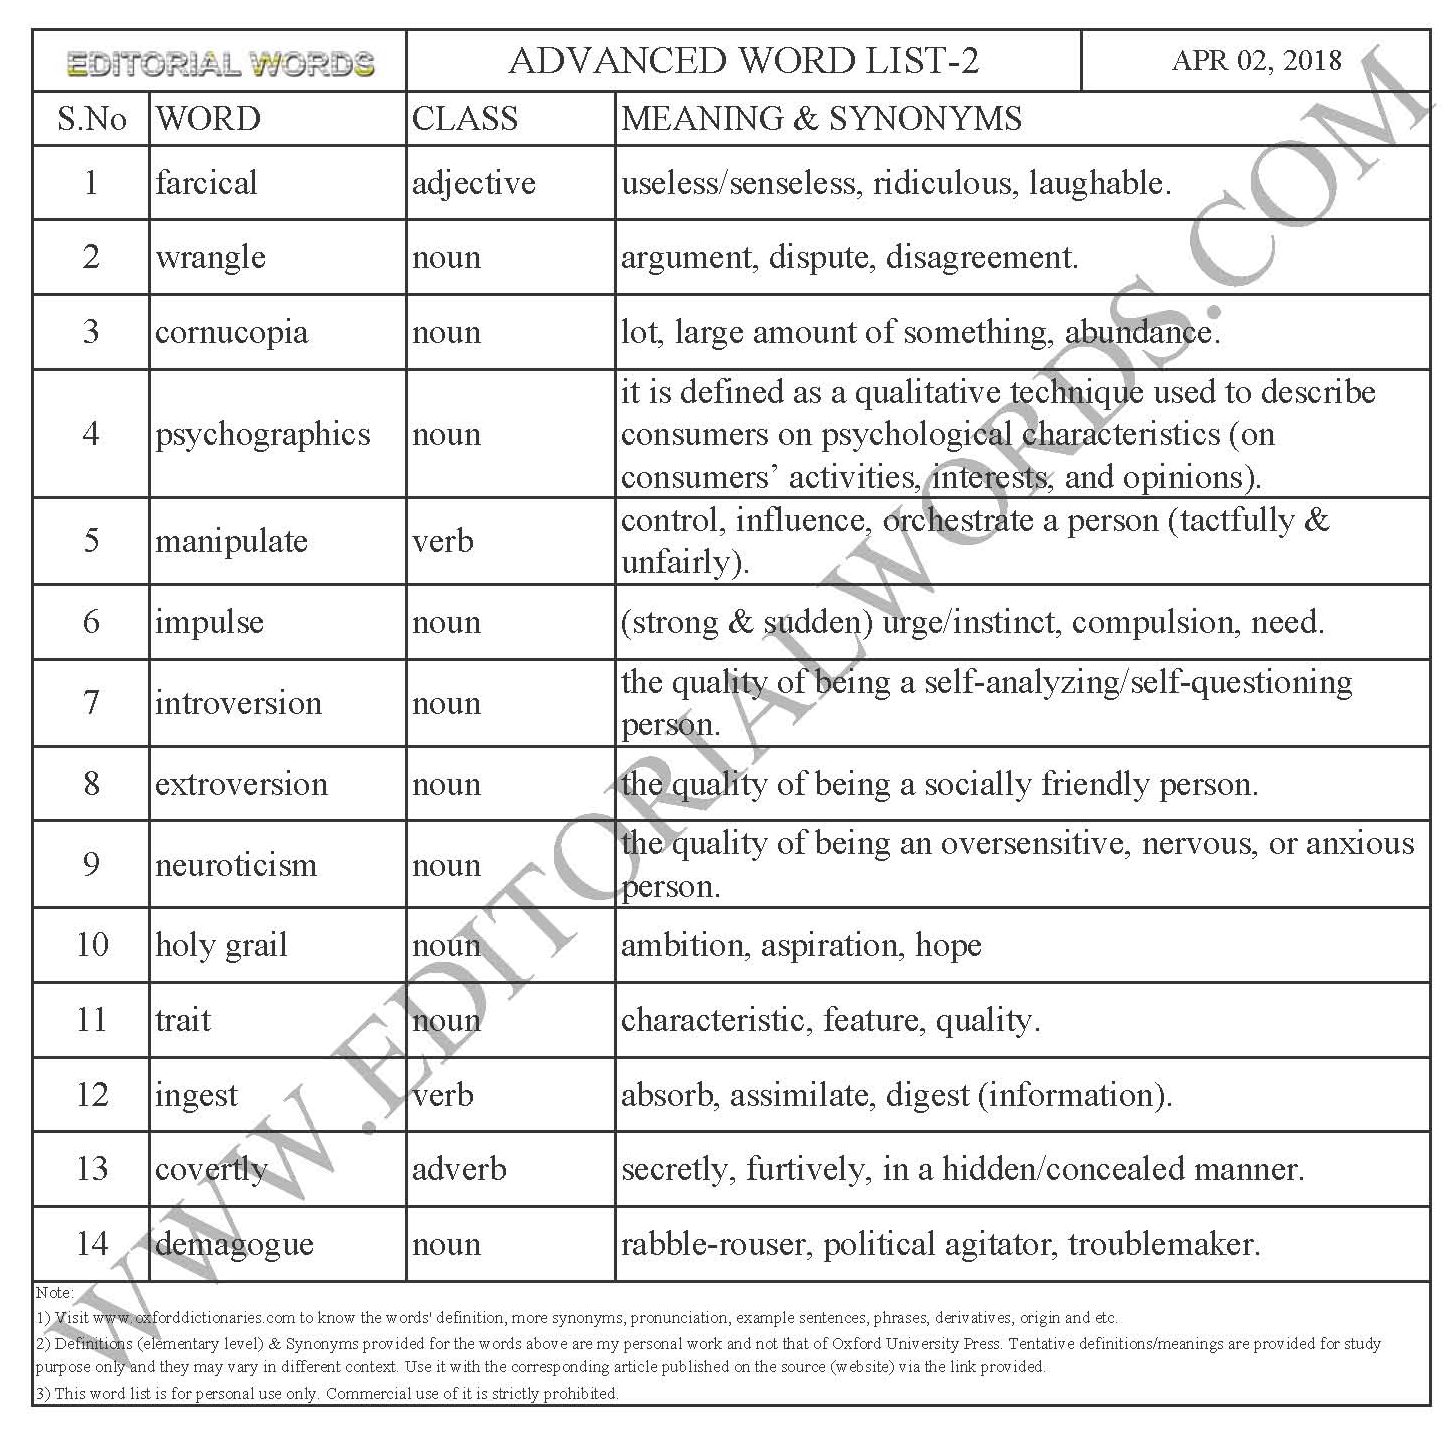 Advanced Word List 2-Learn English-Improve Vocabulary 02APR18